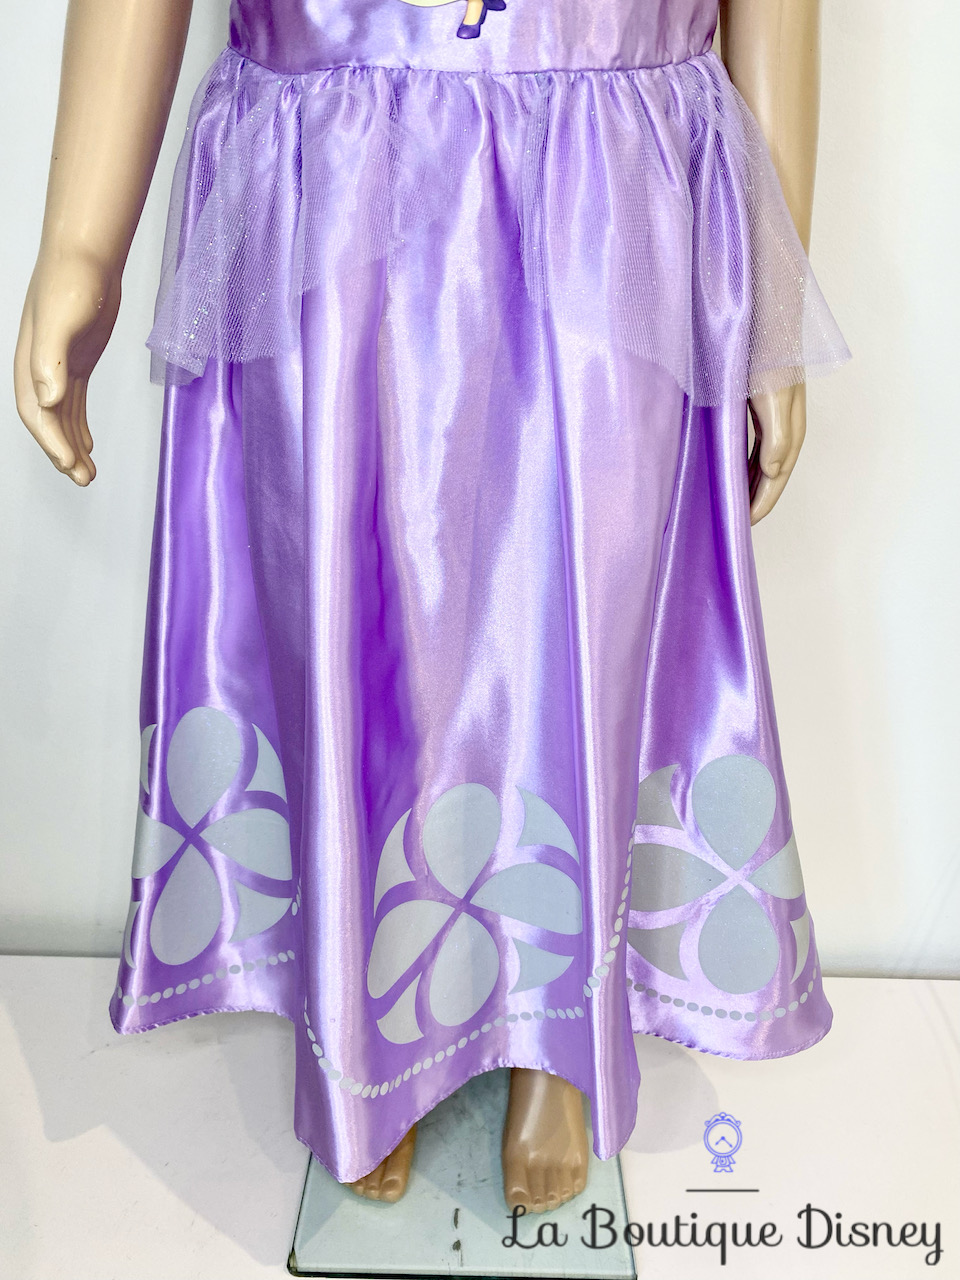 Déguisement Raiponce Disney Rubies taille 5-6 ans robe princesse